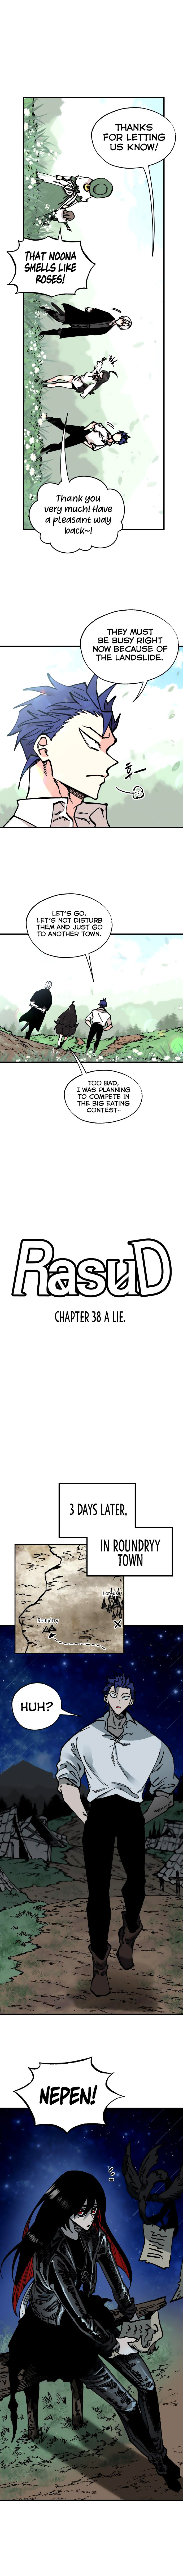 Rasud - Chapter 38 Page 7